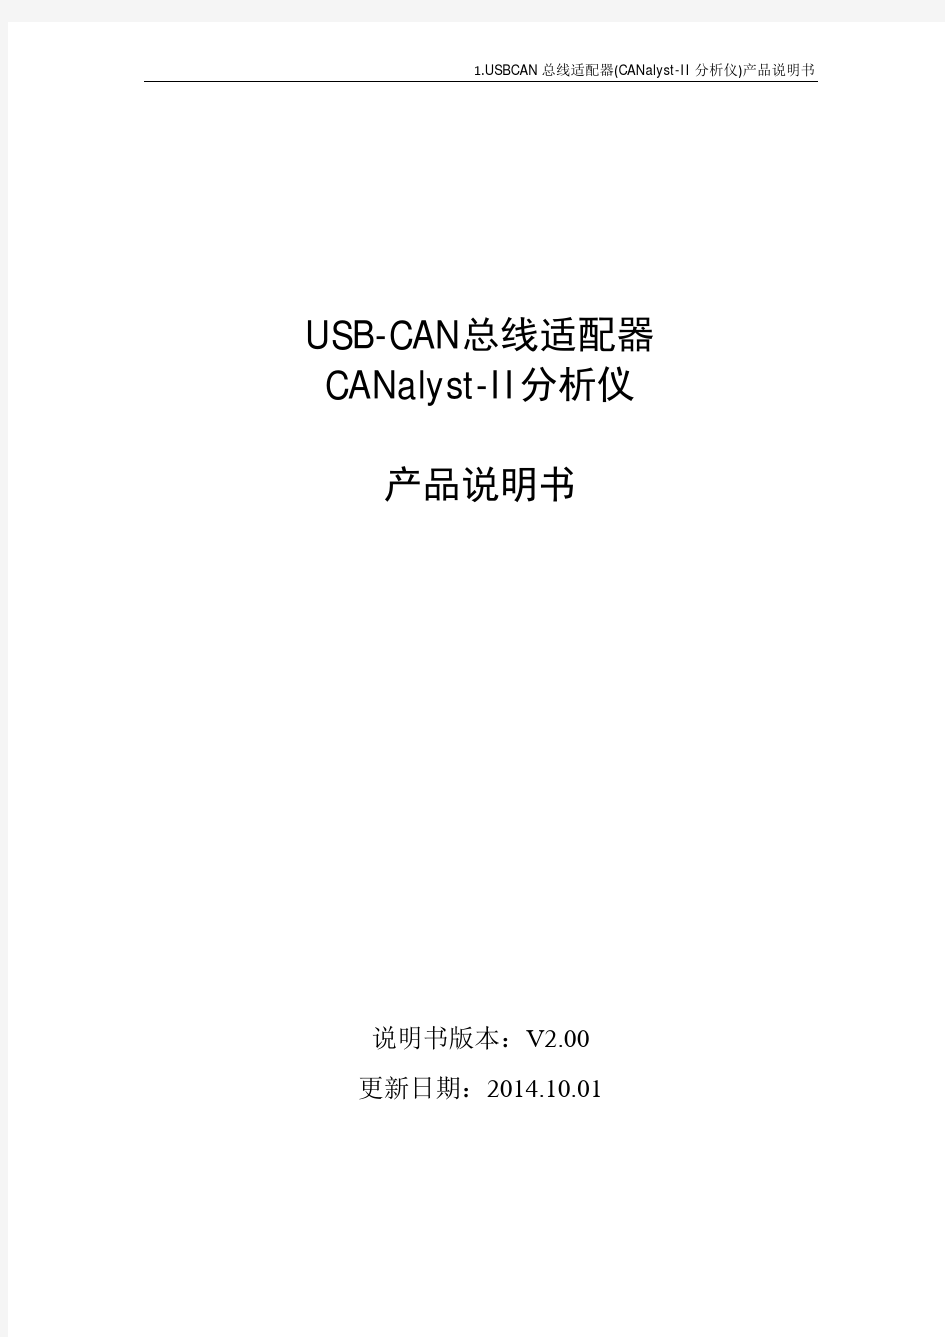 USBCAN总线适配器(CANalyst-II分析仪)产品说明书